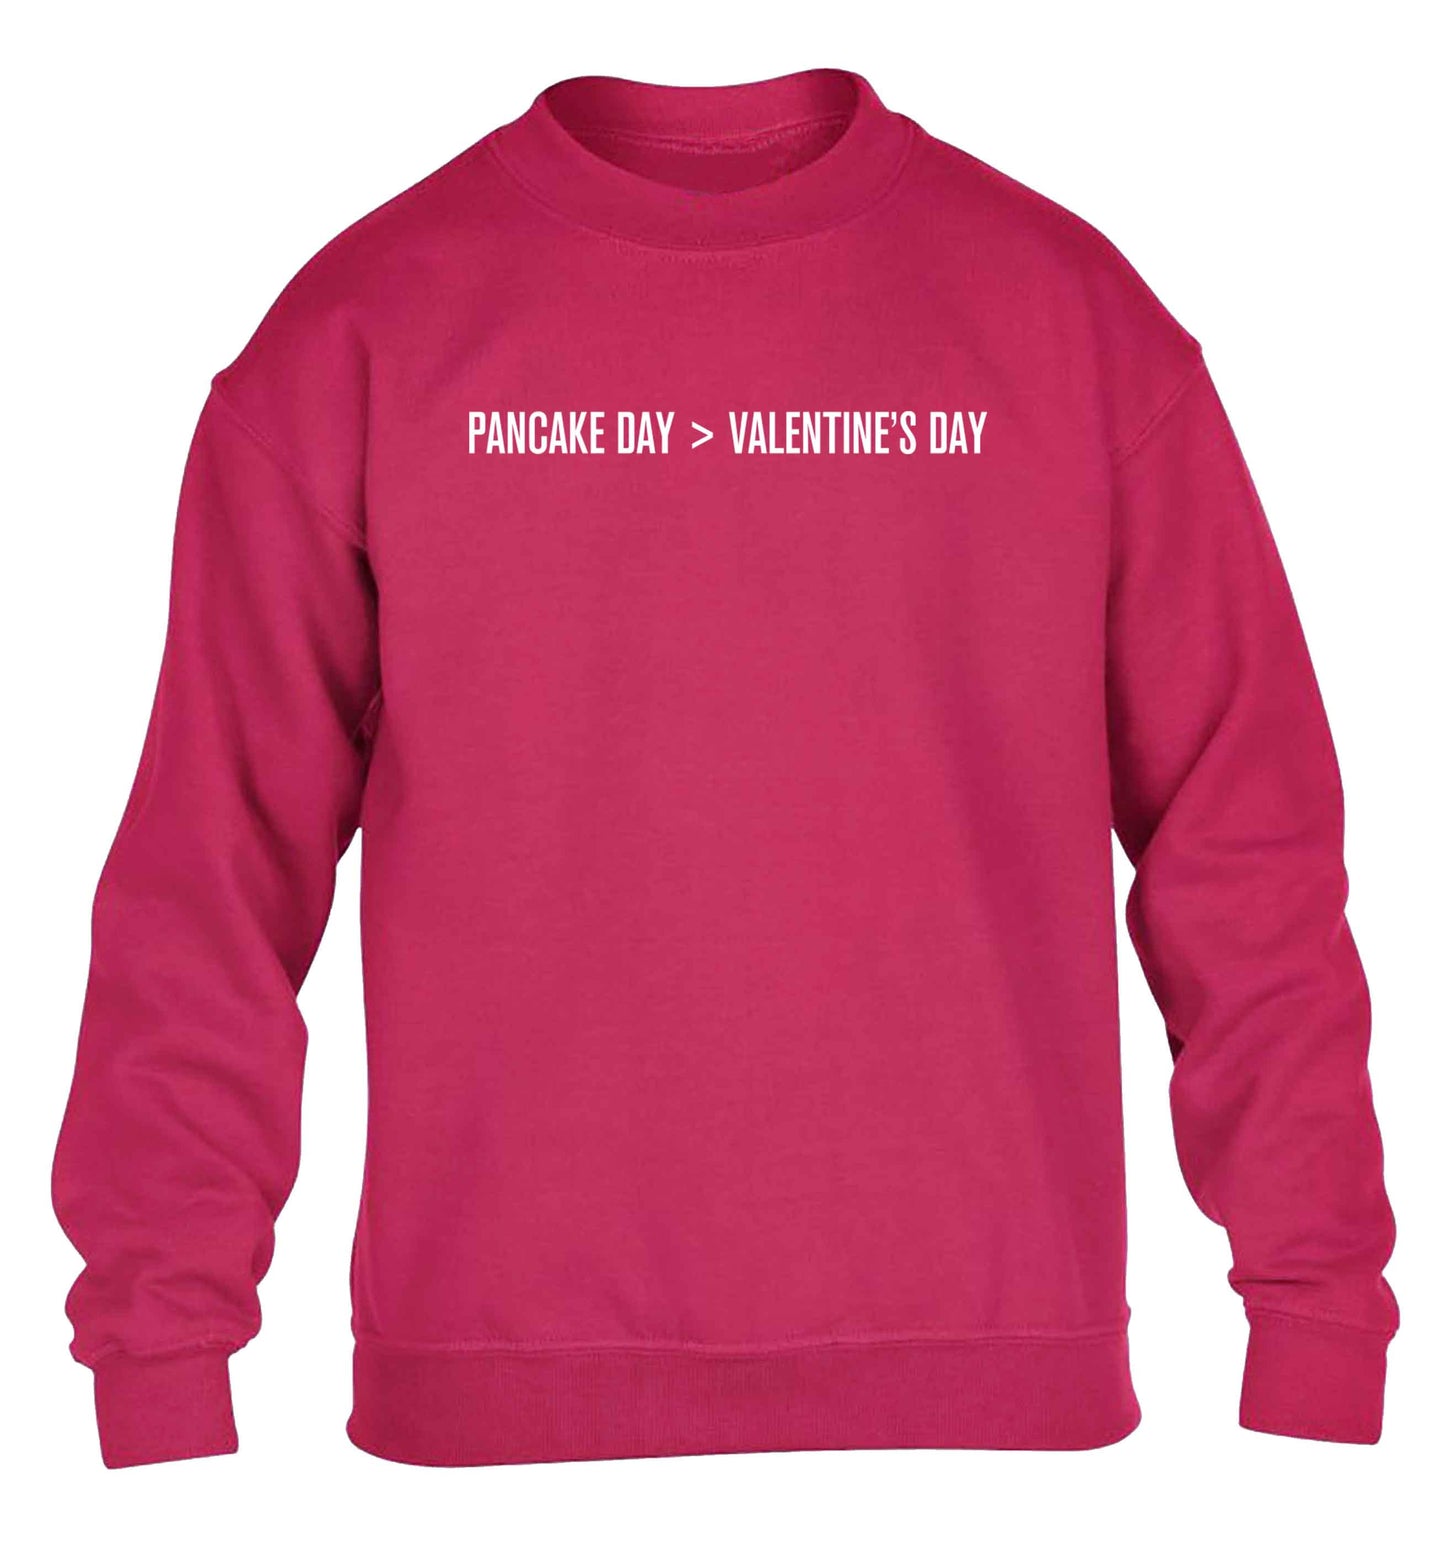 Pancake day > valentines day children's pink sweater 12-13 Years